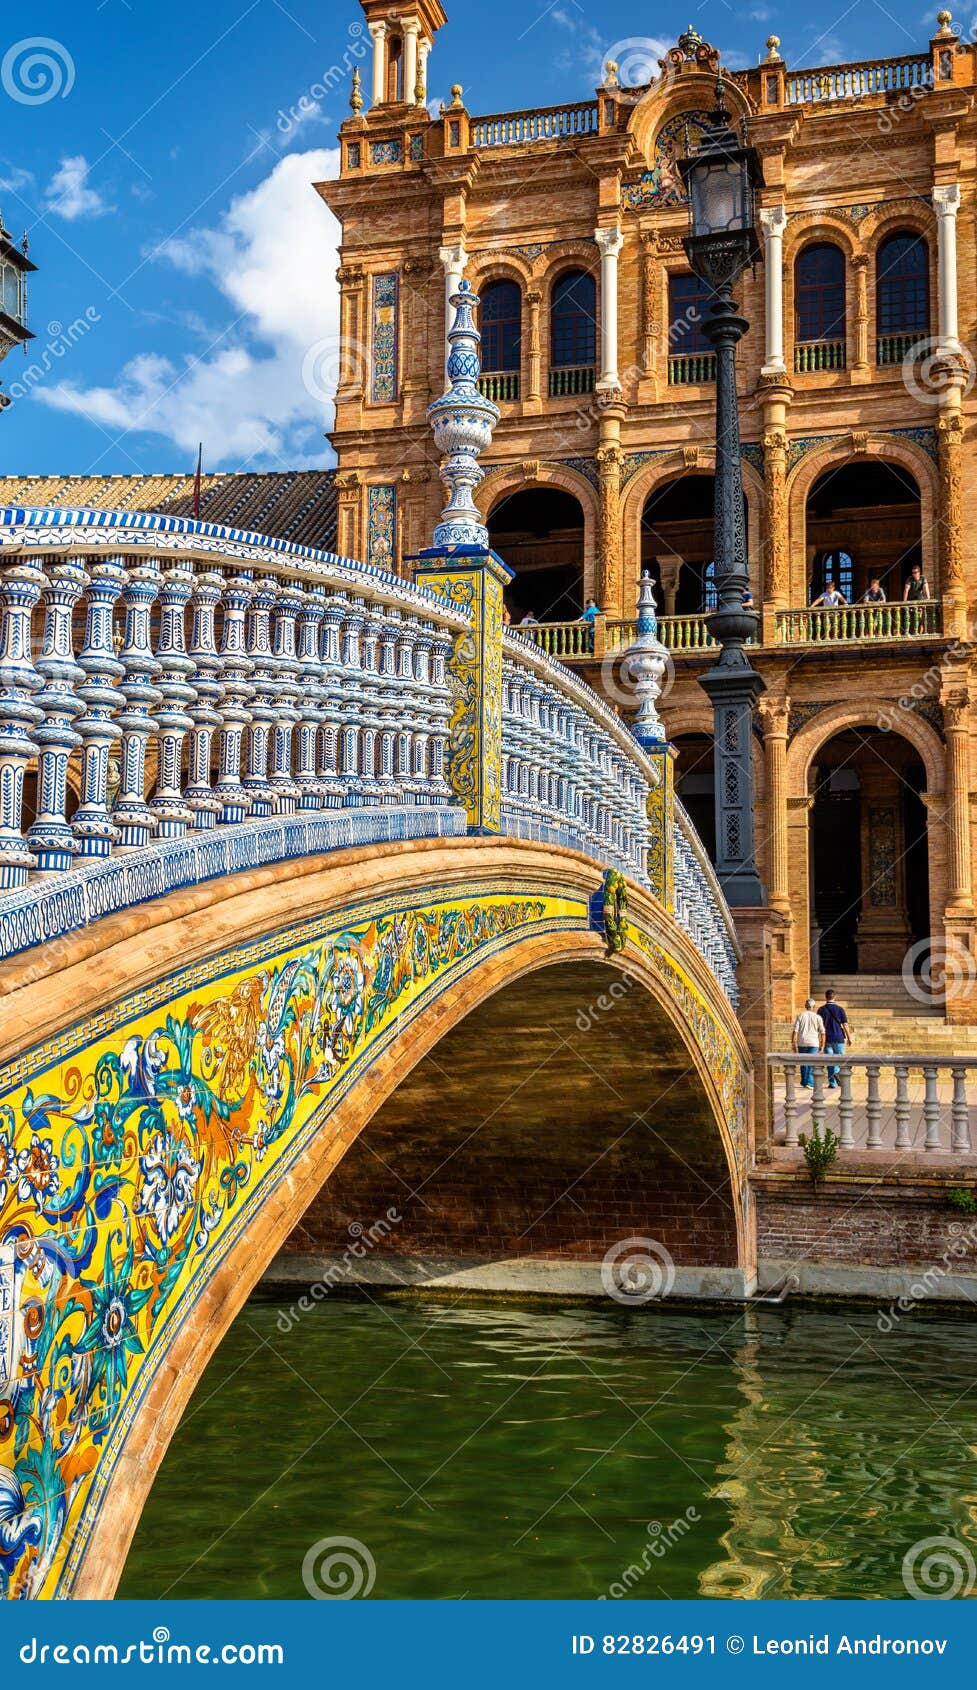 bridge at the plaza de espana in seville, spain